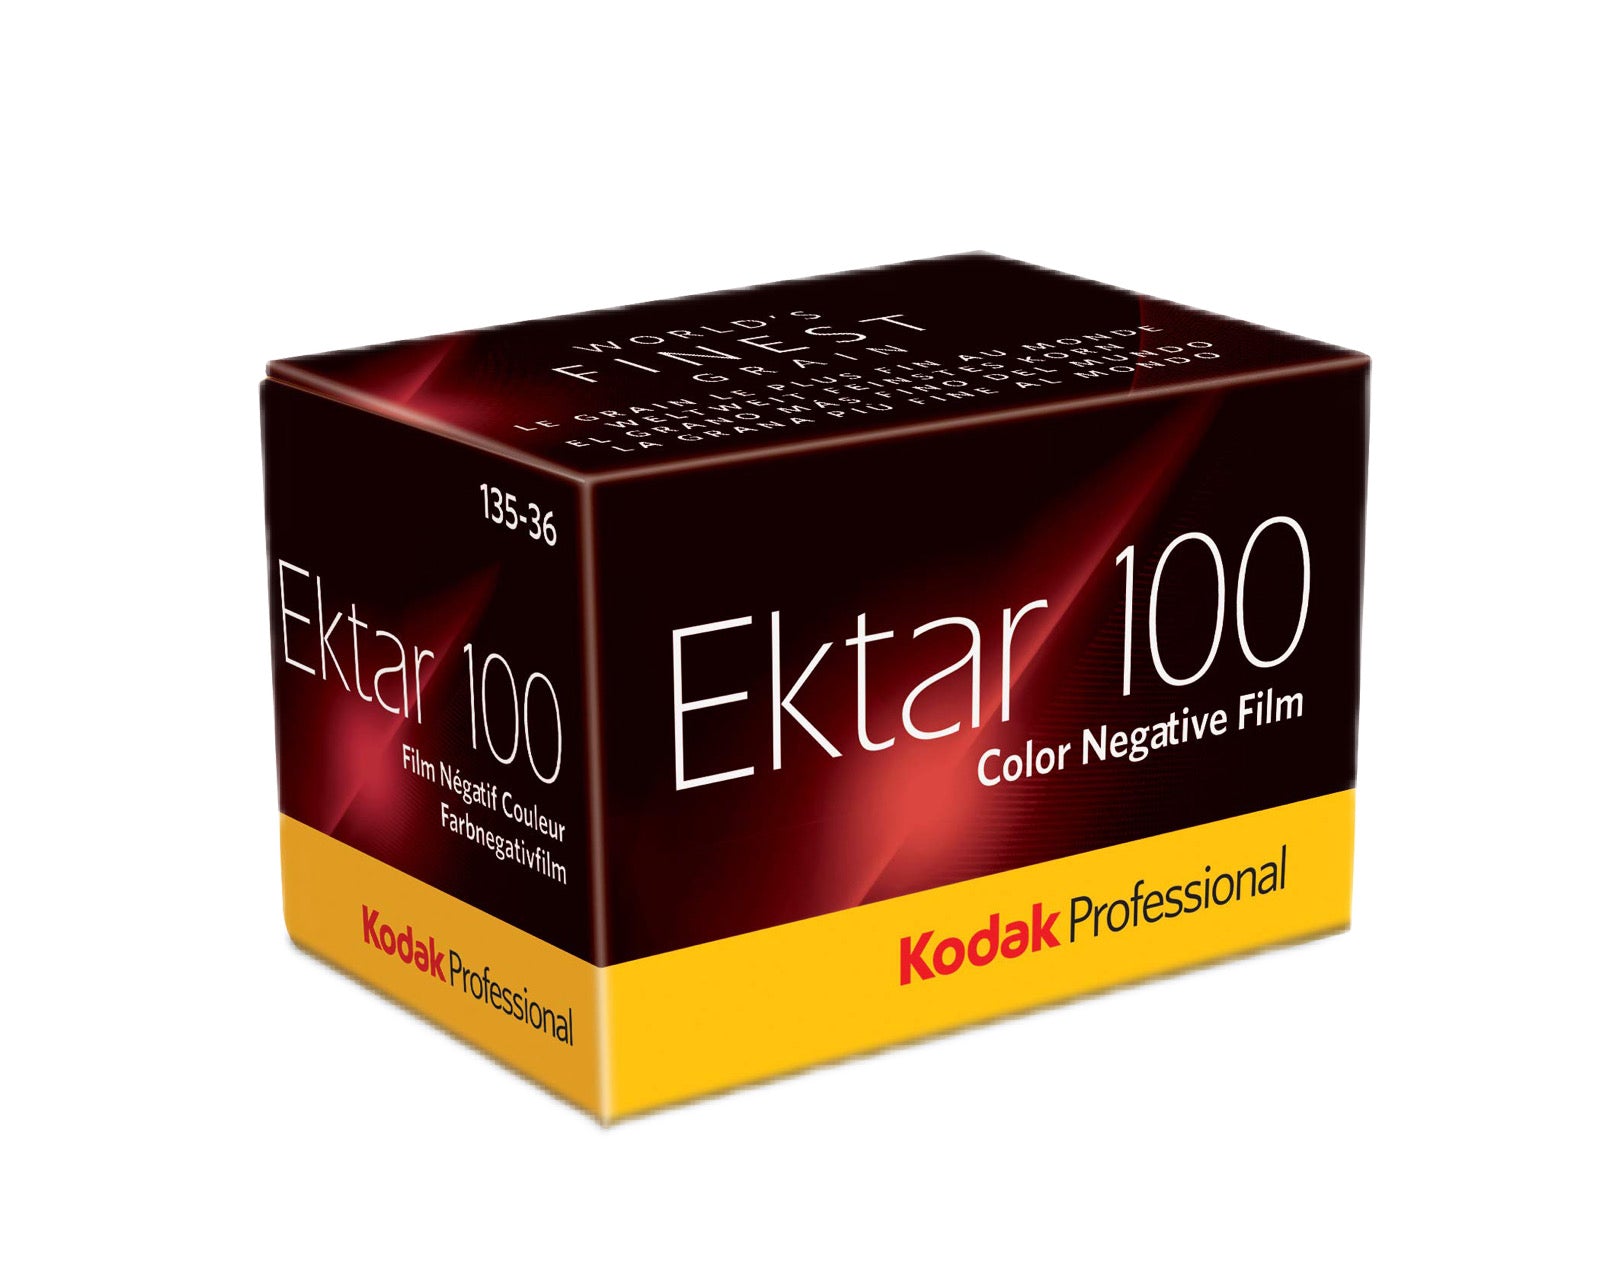 Ektar 100 color negative film 135 type (36 exp.)